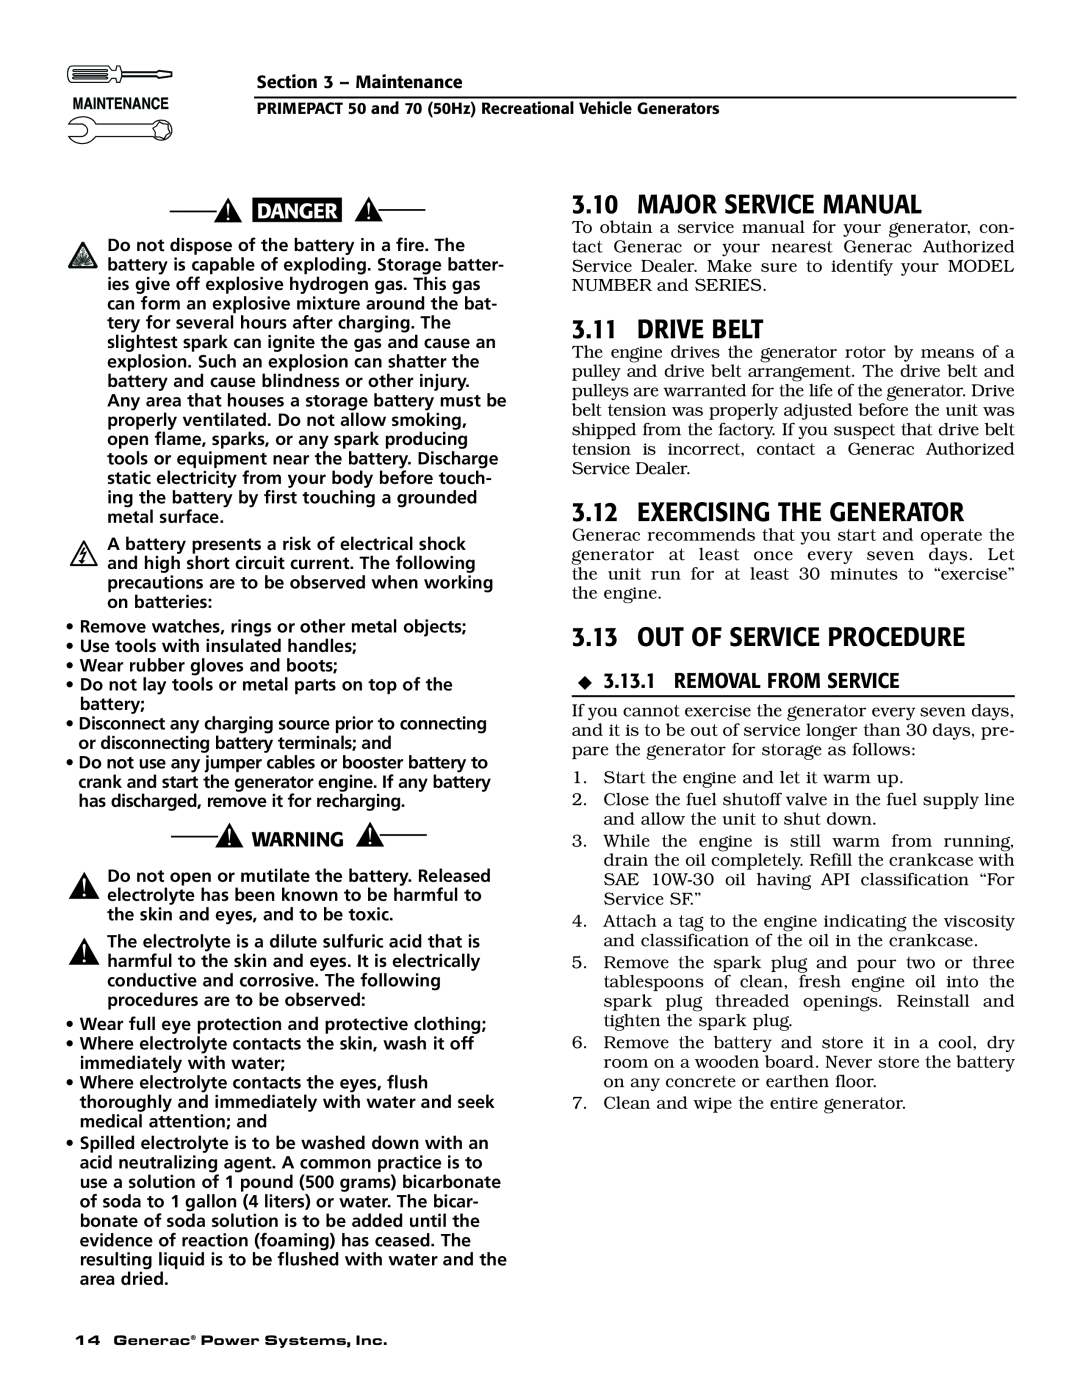 Generac 00784-2, 09290-4 owner manual Major Service Manual, Drive Belt, Exercising The Generator, Out Of Service Procedure 